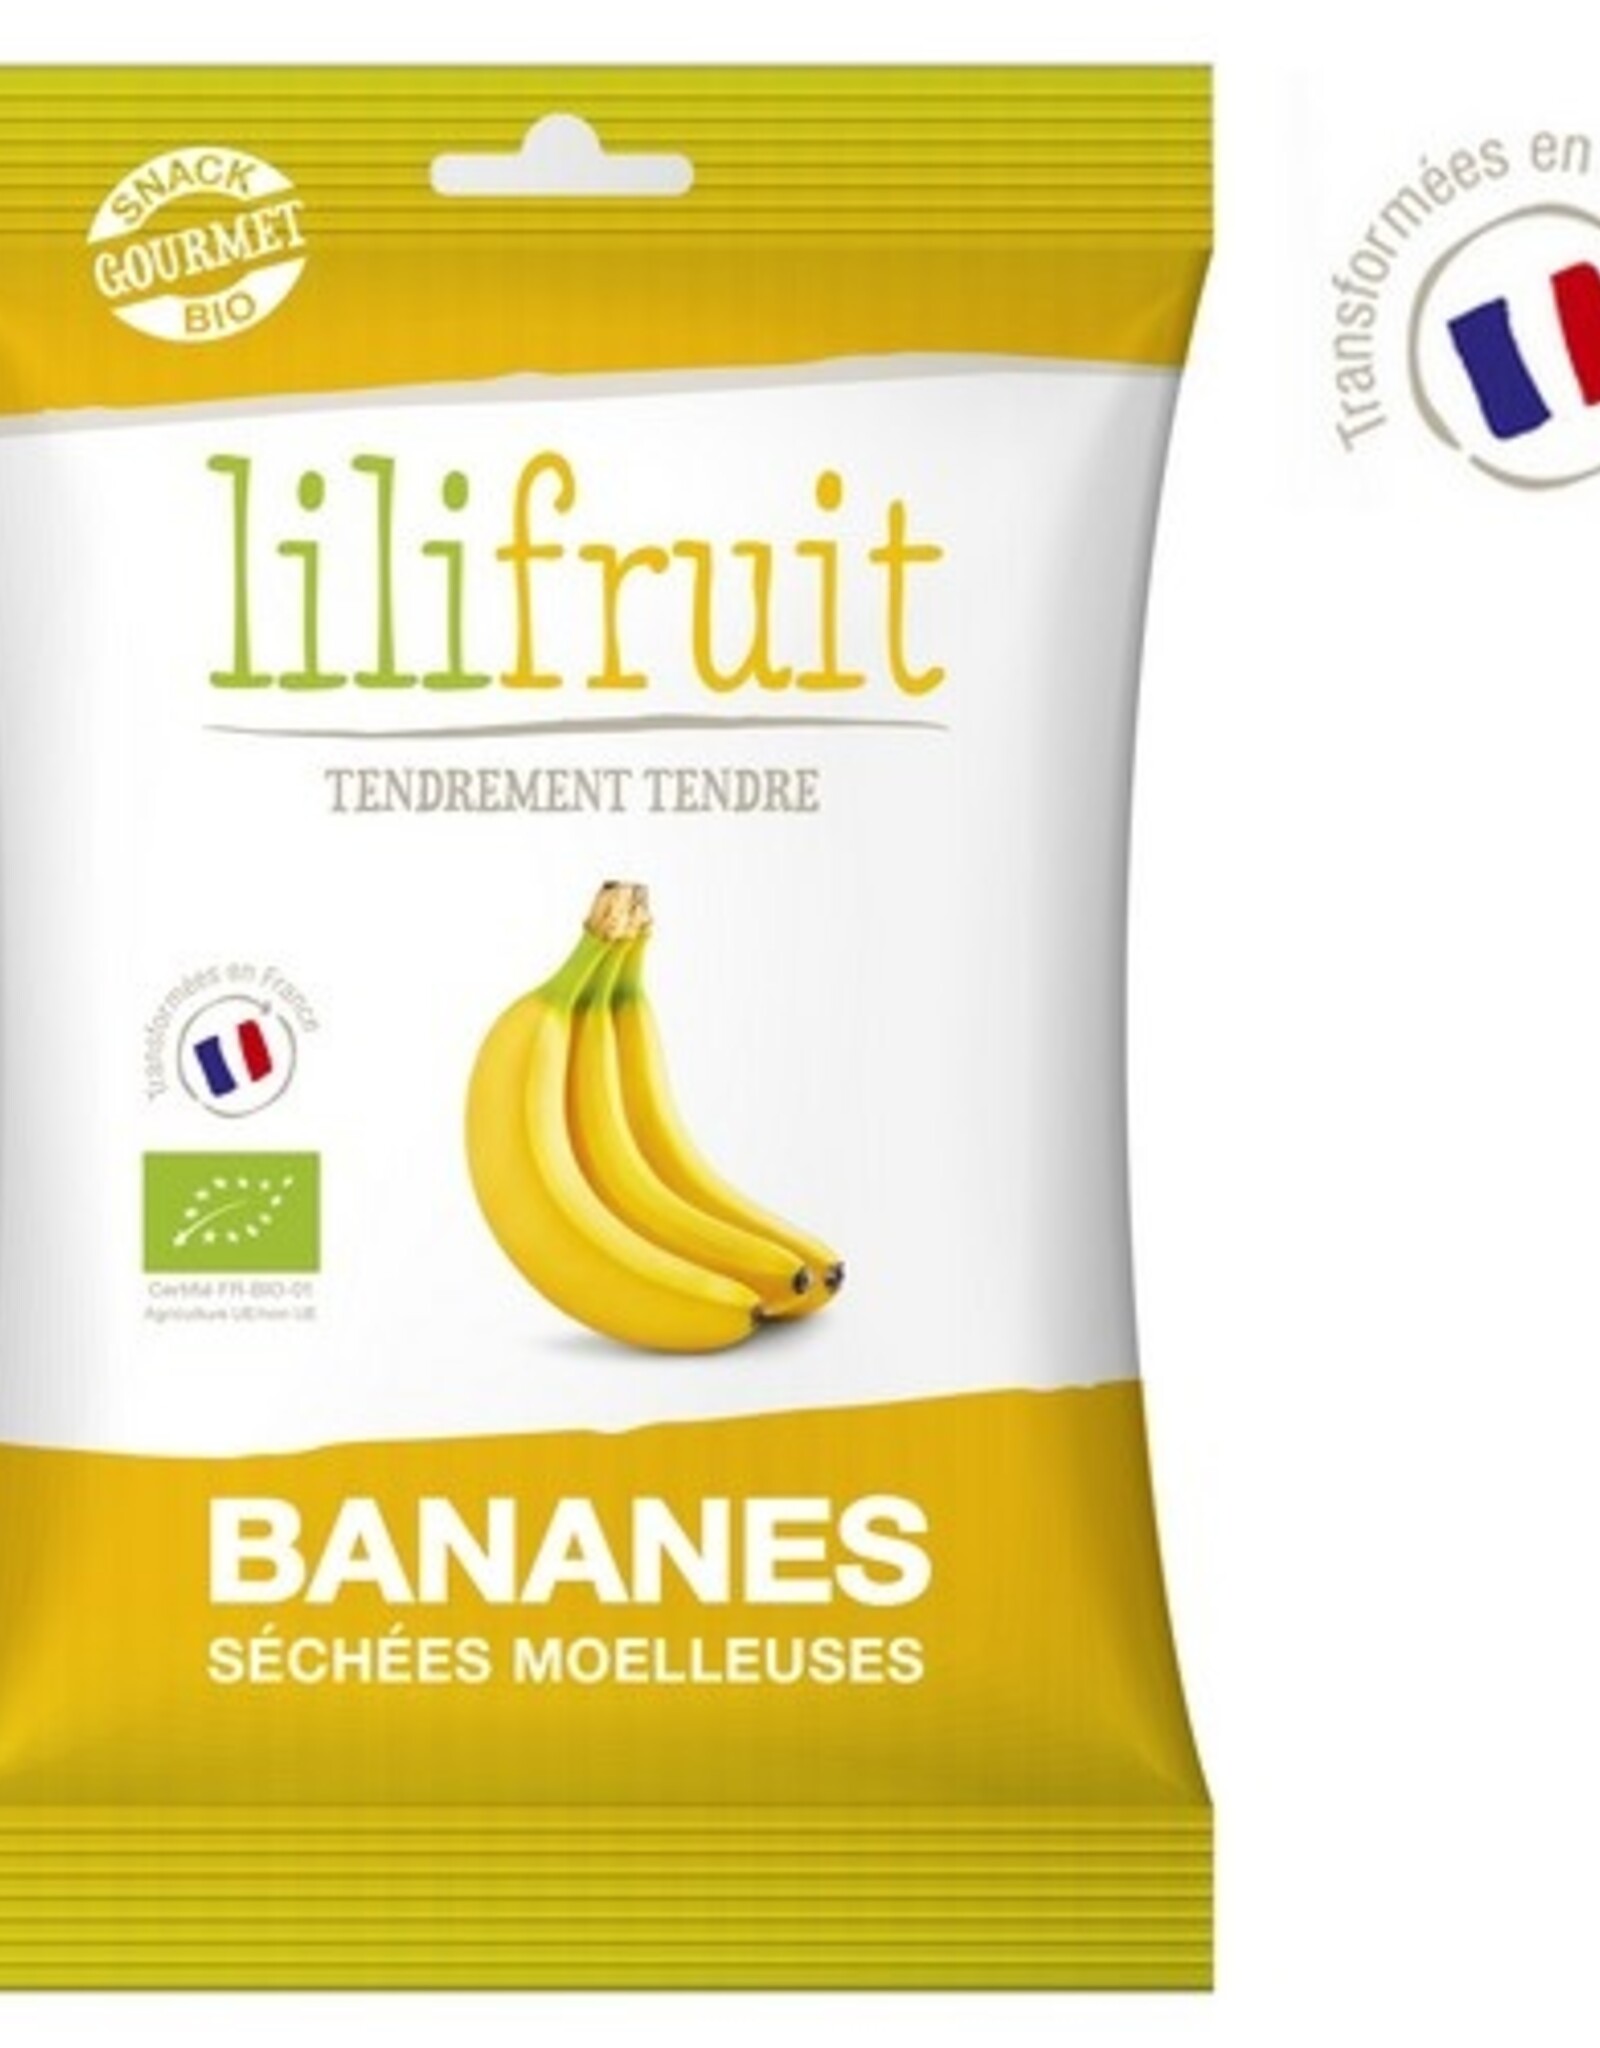 Lilifruit Bananas - 70g